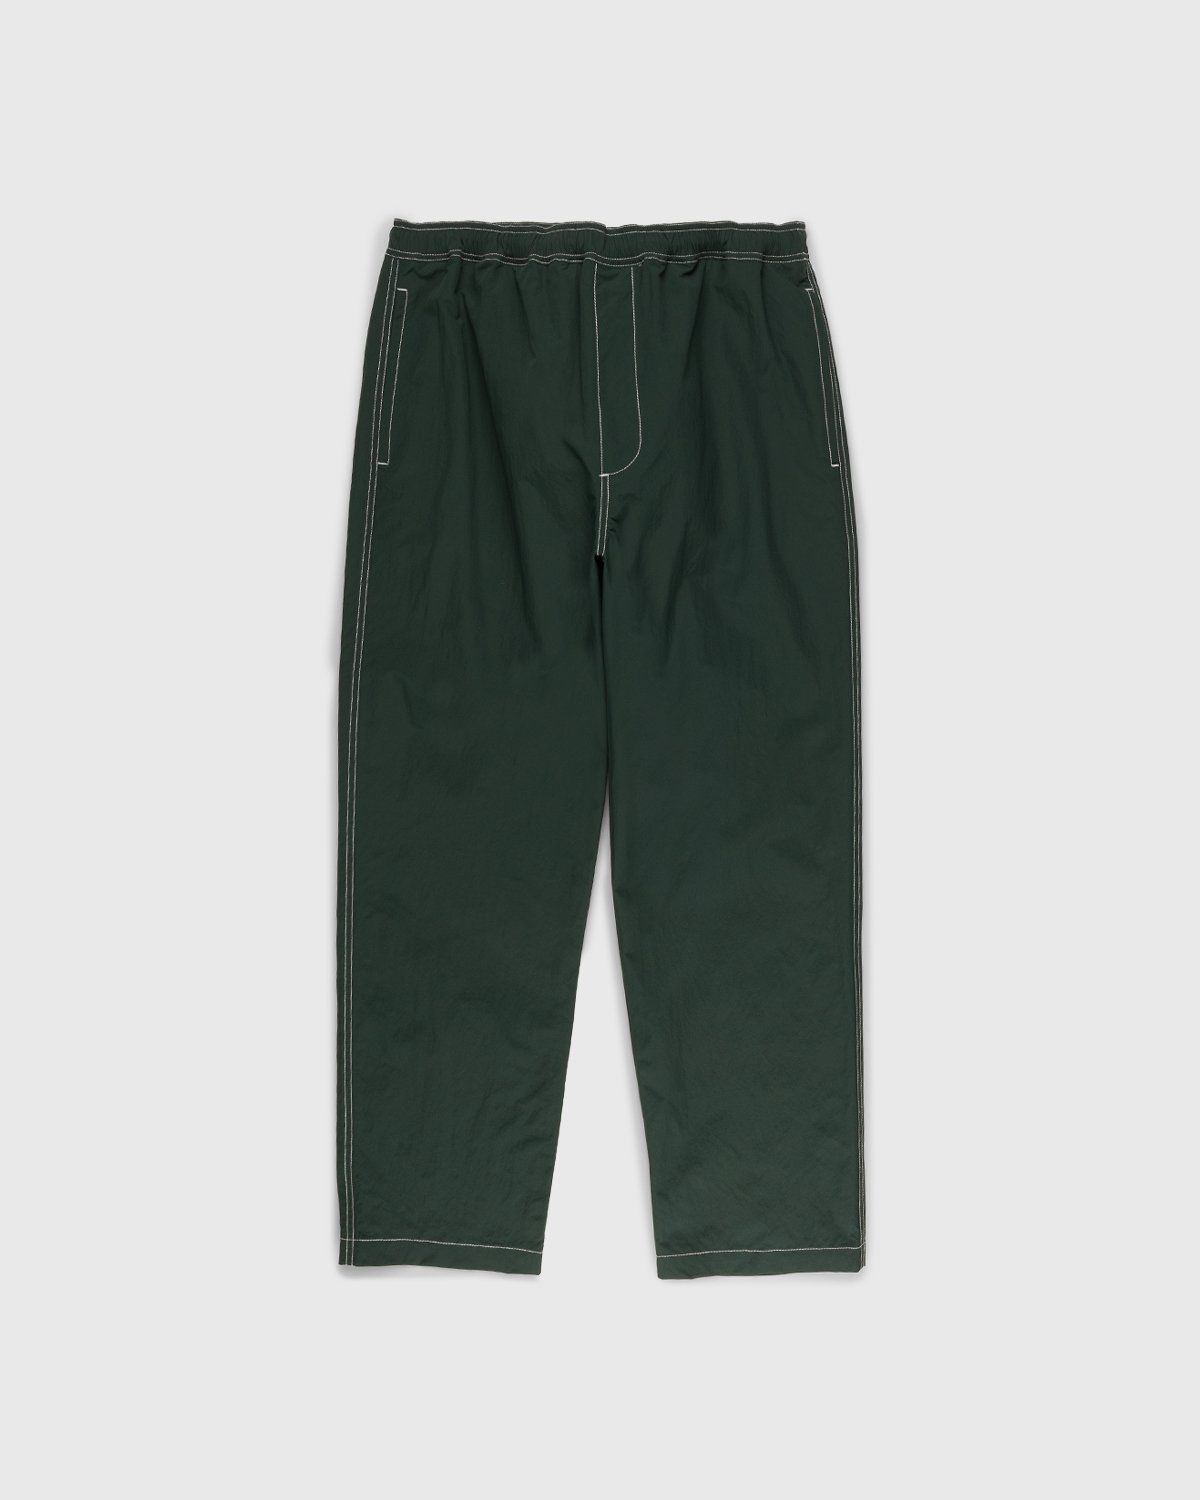 Highsnobiety – Contrast Brushed Nylon Elastic Pants Green - Pants - Green - Image 1